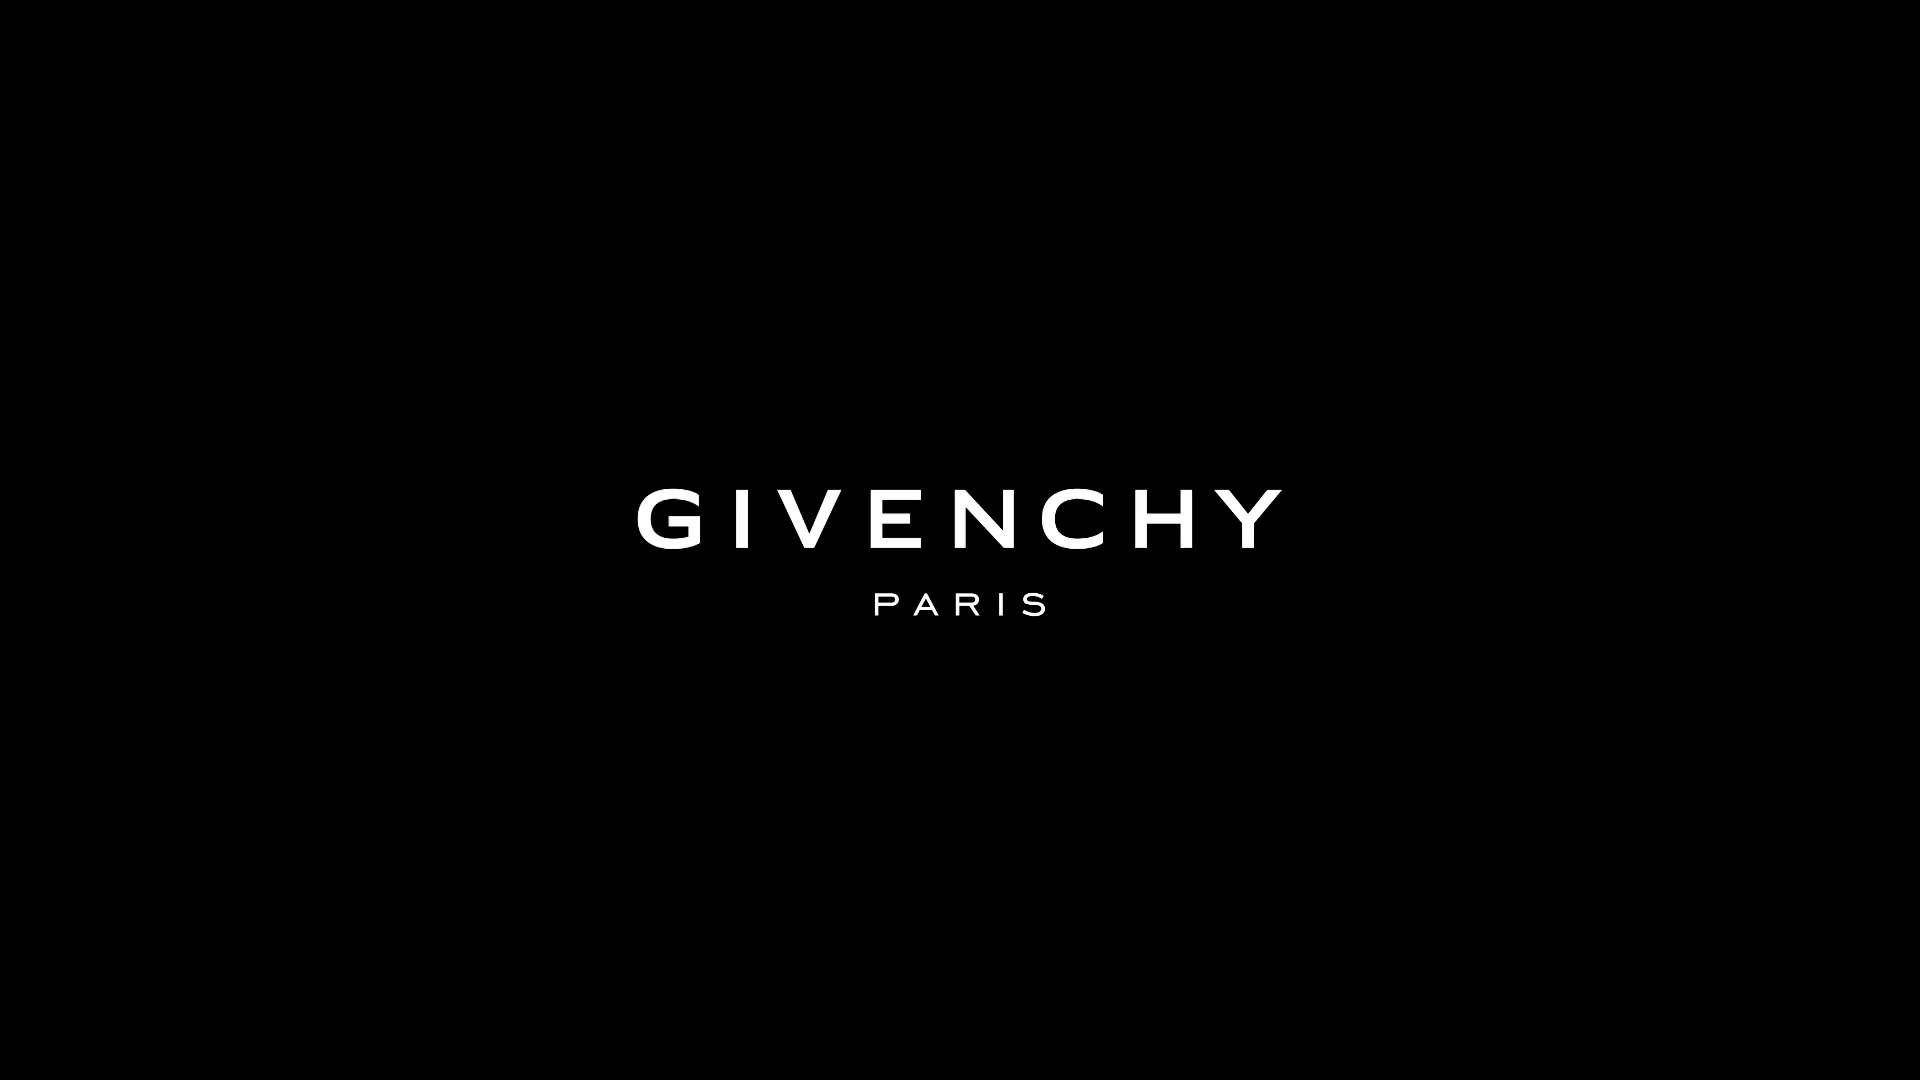 Givenchy 1920 X 1080 Wallpaper